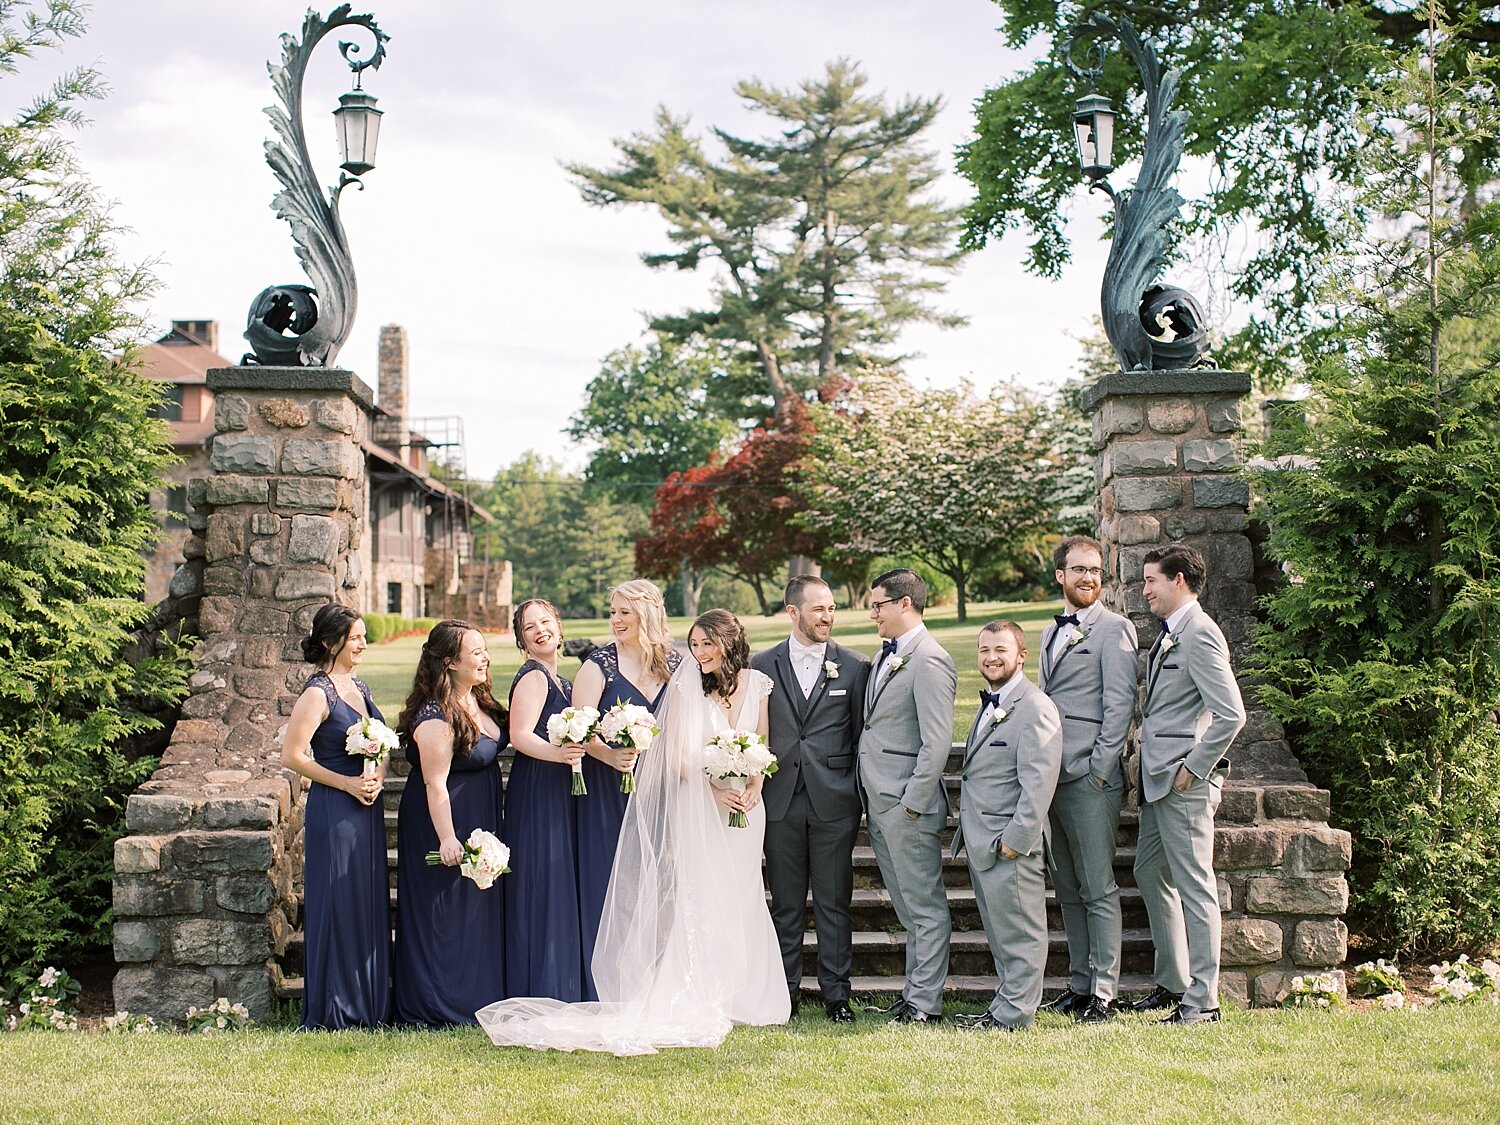 joyful bridal party portraits in Paramount Country Club gardens